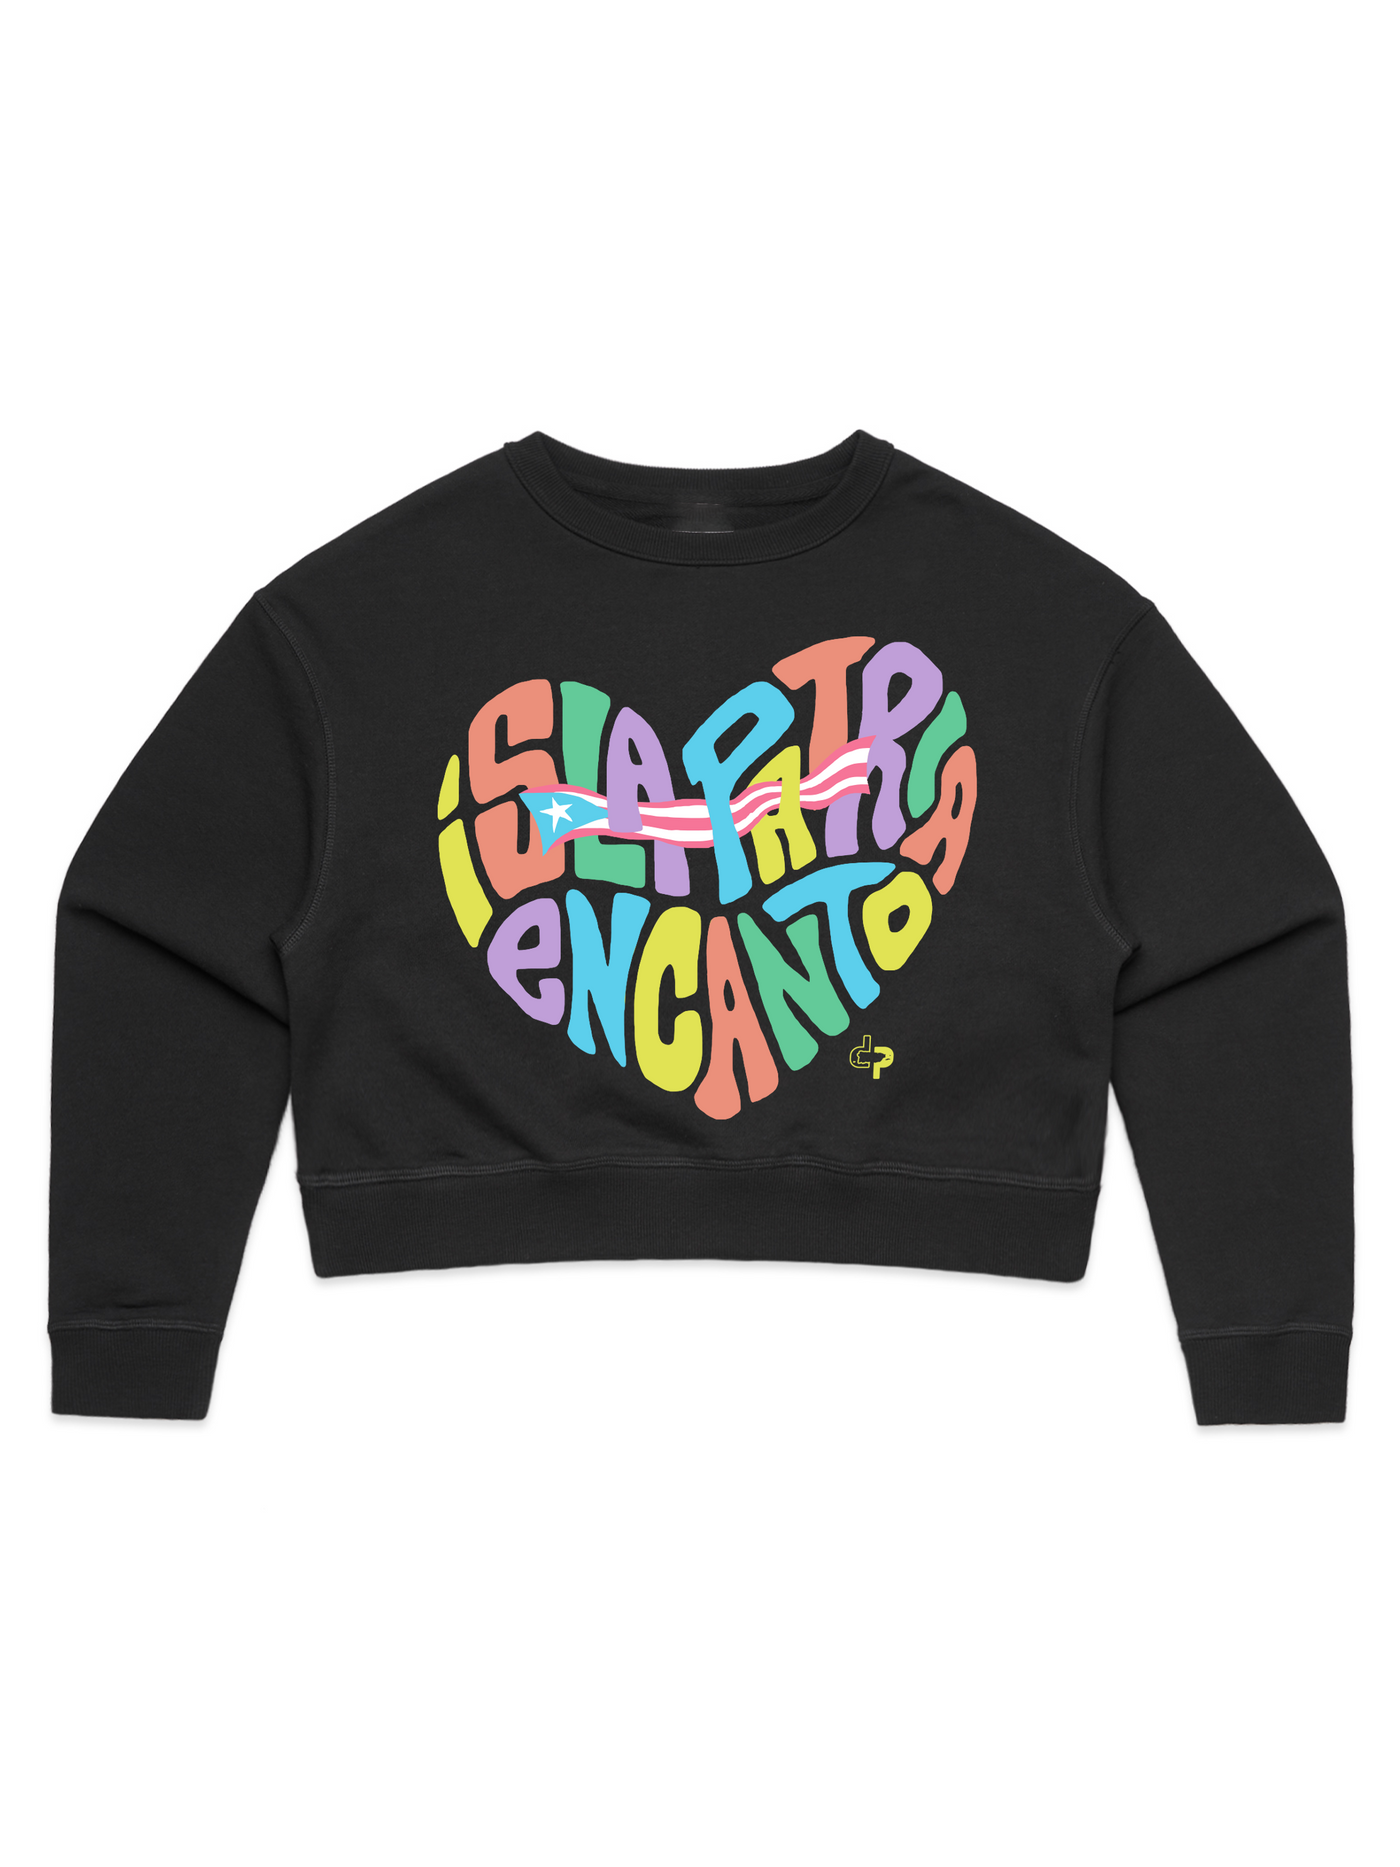 Isla Patria Encanto -  Women's L/S Sweatshirt Crop Tee